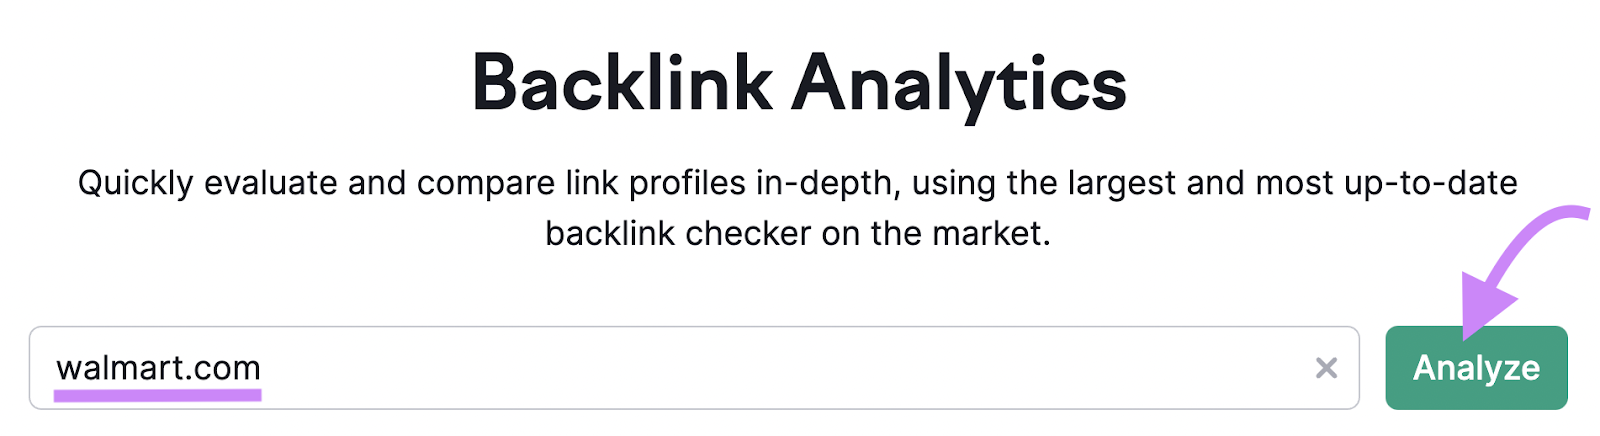 "walmart.com" entered into the Backlink Analytics search bar